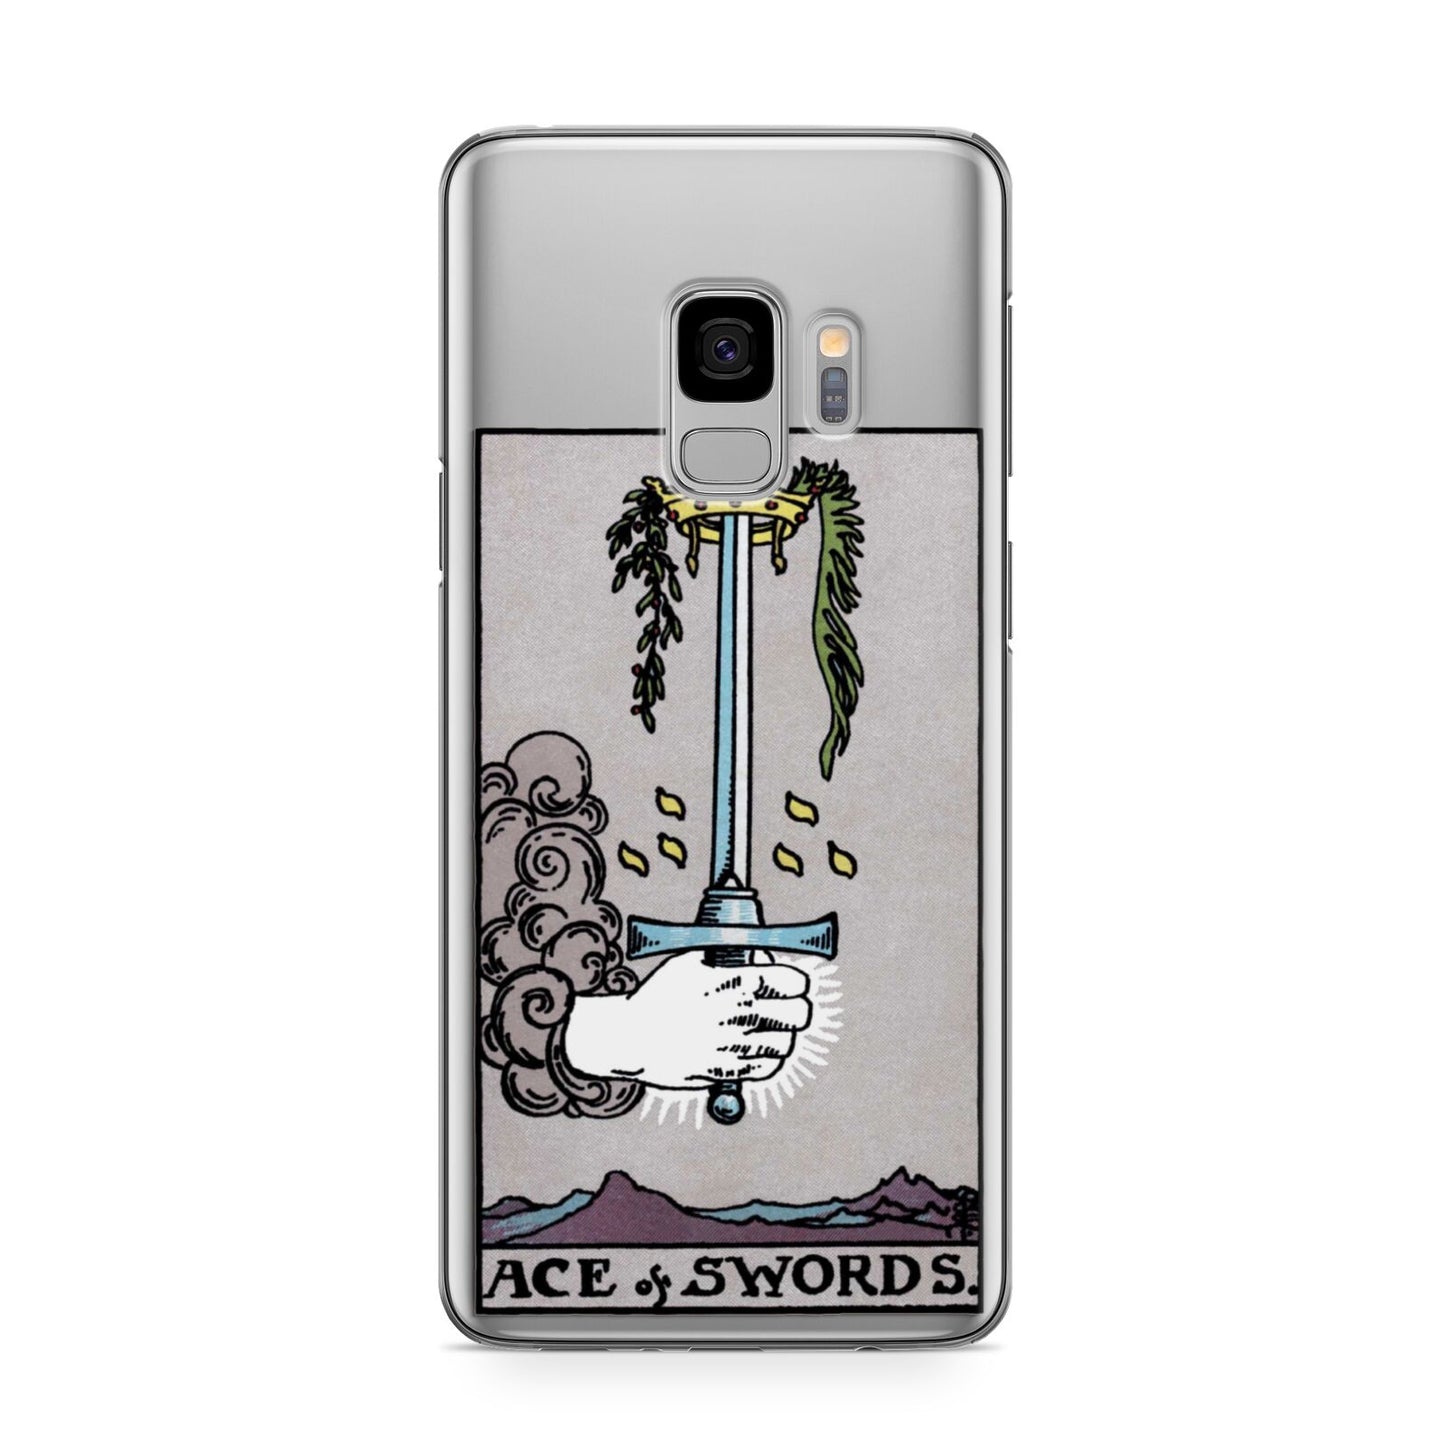 Ace of Swords Tarot Card Samsung Galaxy S9 Case